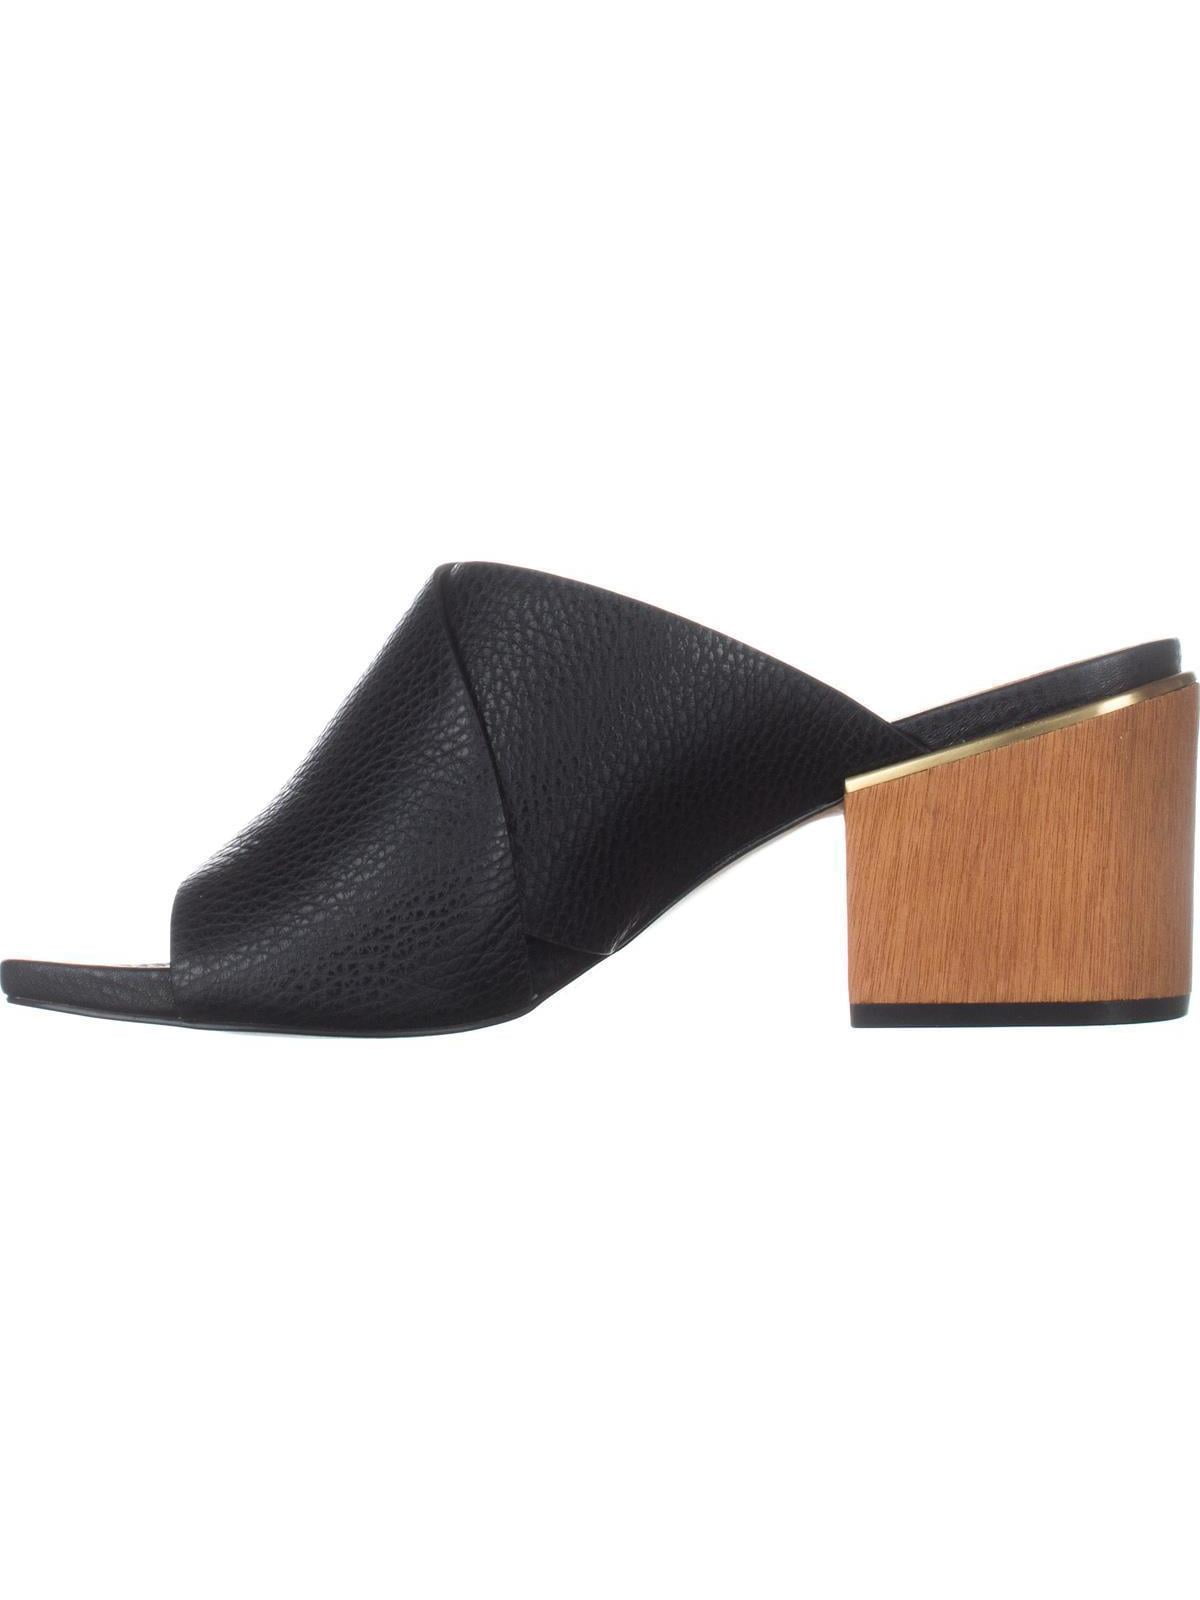 Calvin Klein Joelle Slip-On Square Toe Mules, Black | Walmart Canada